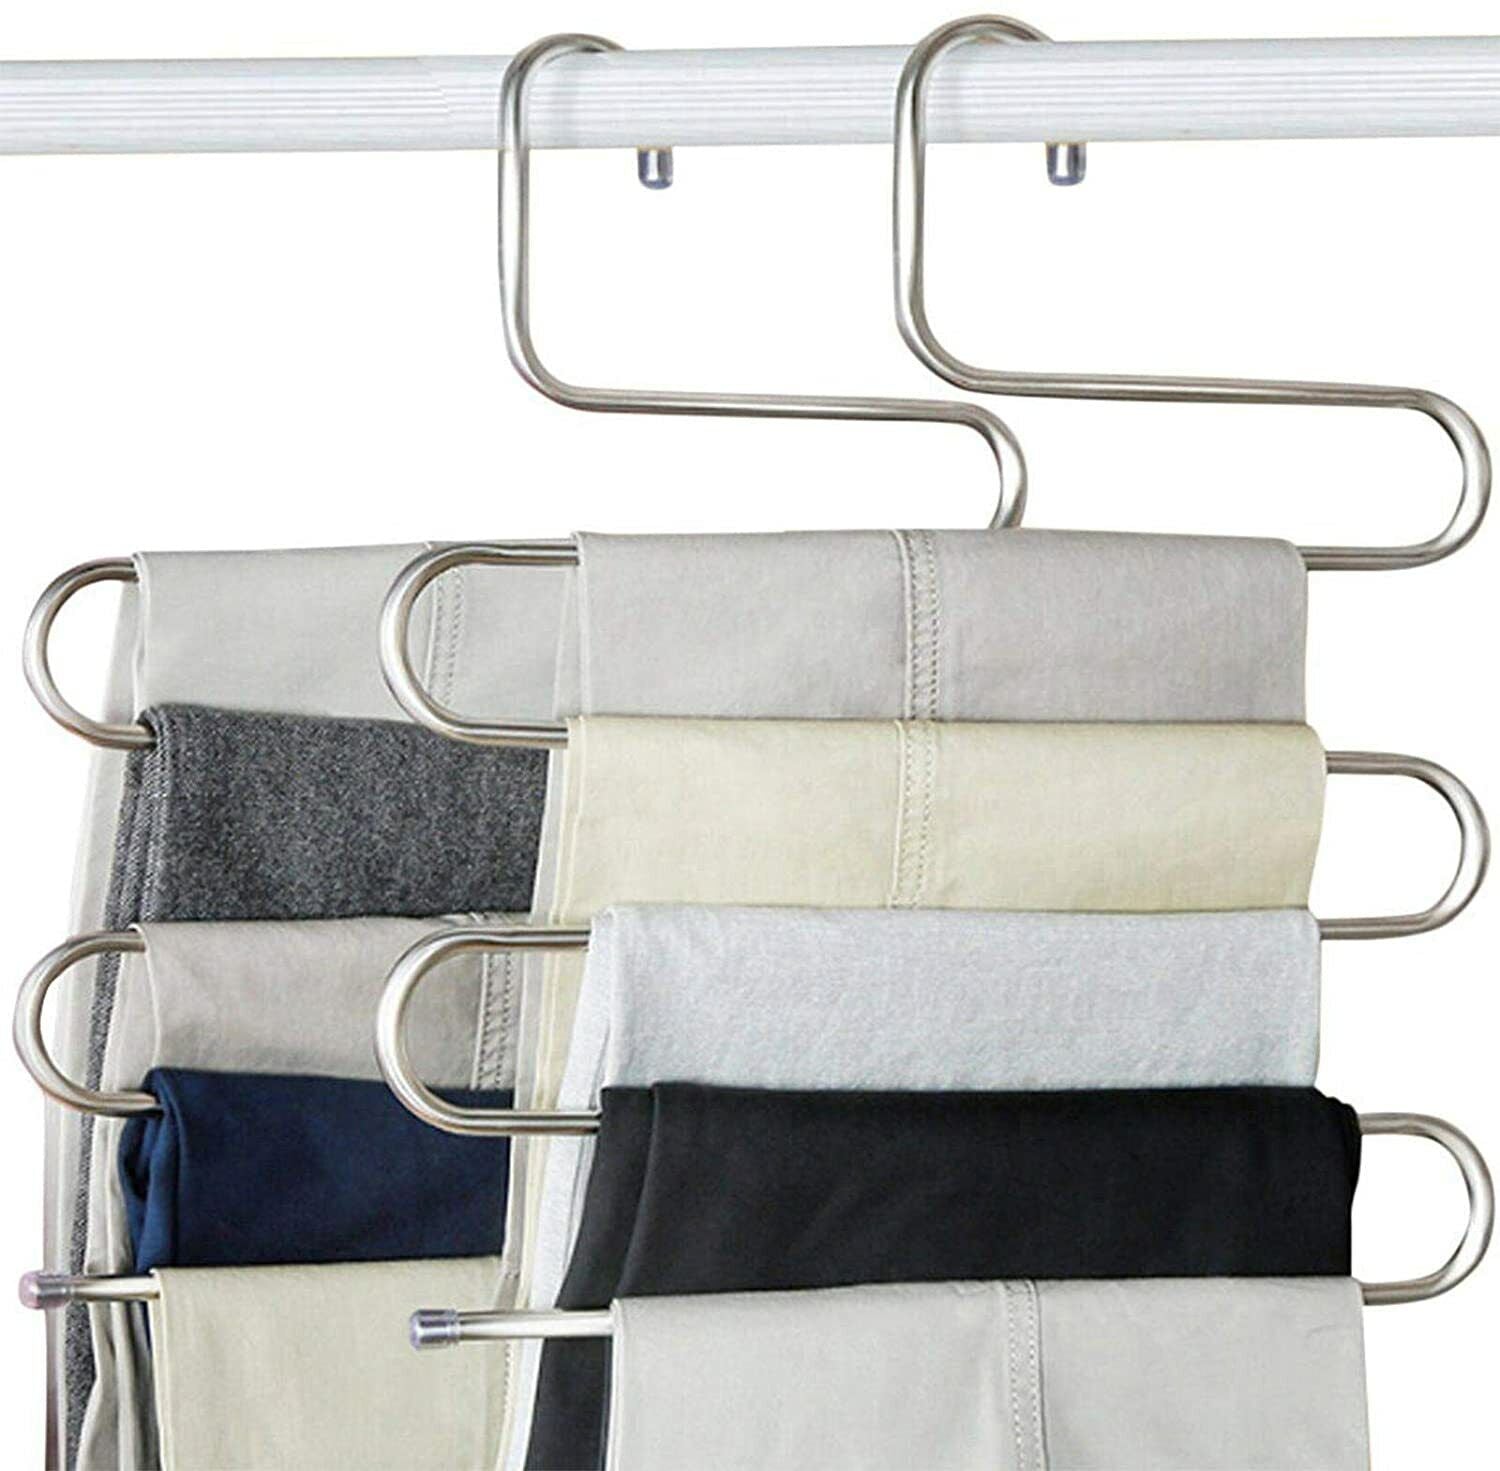 Kitcheniva Adjustable Clip Trousers Hanger - Pack of 100, Pack of